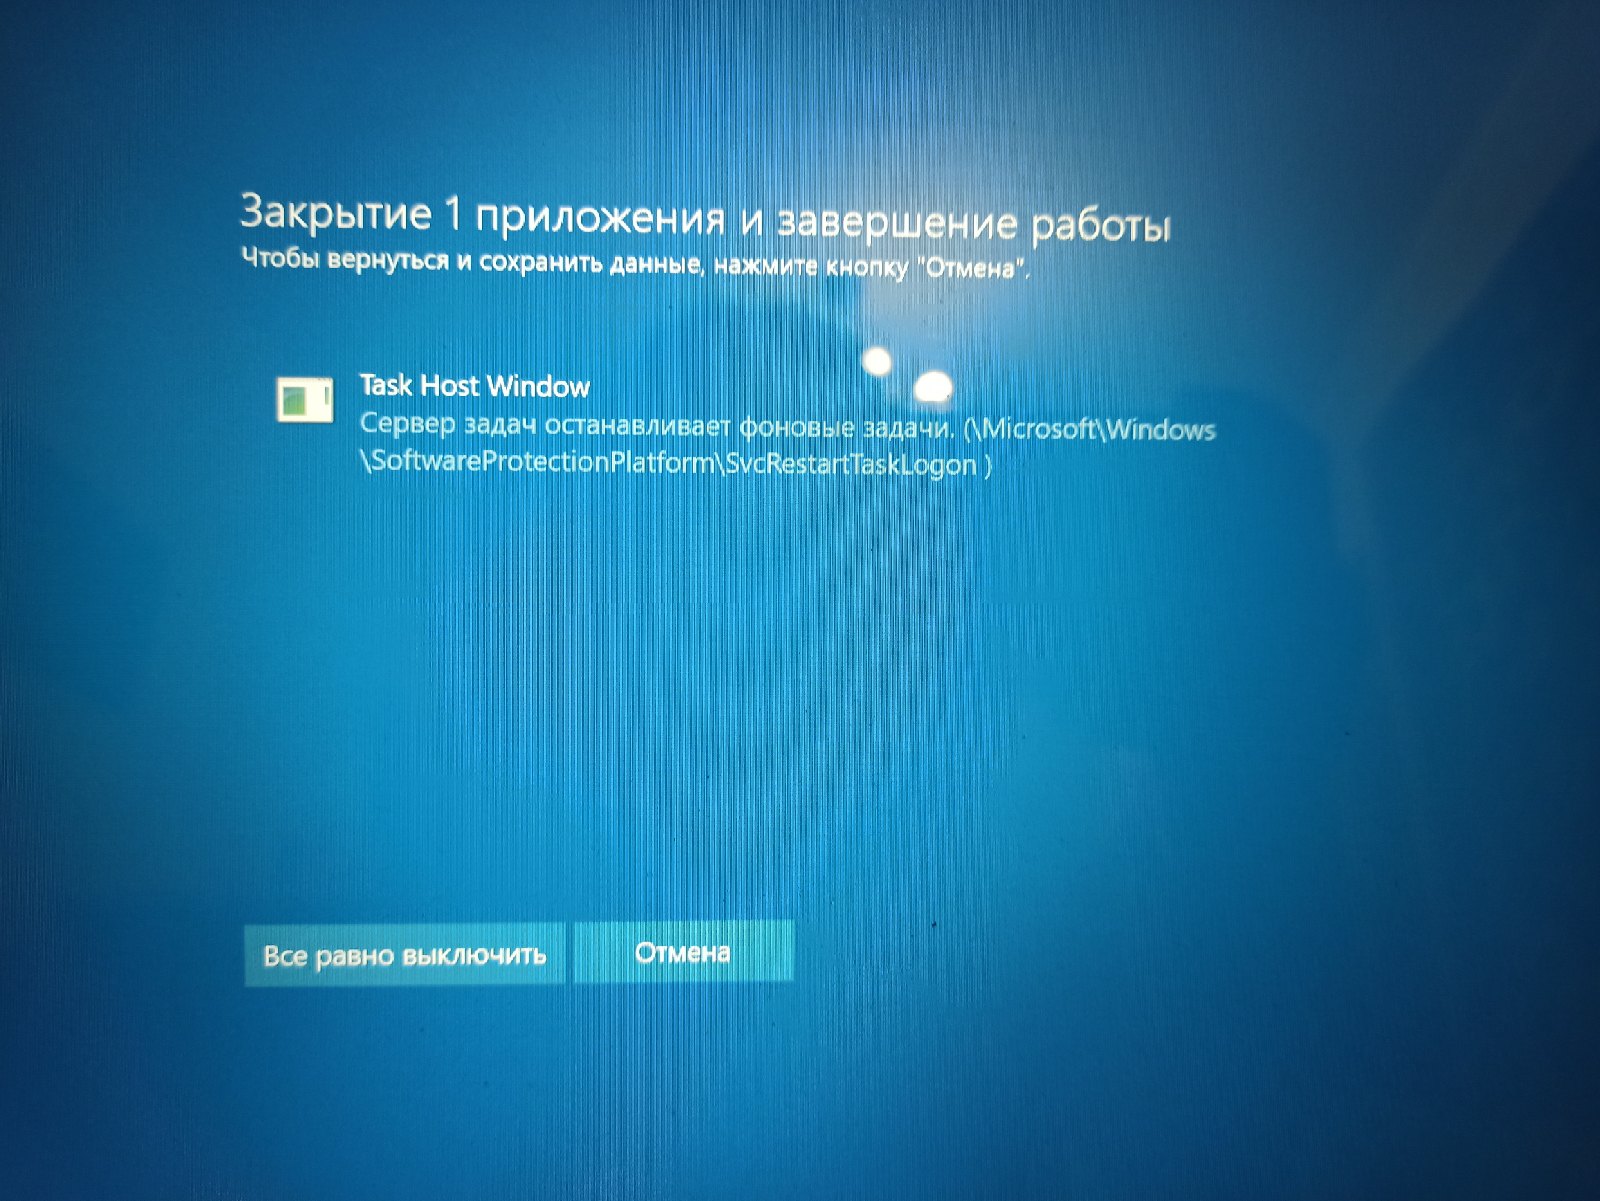 Task host Window вирус?